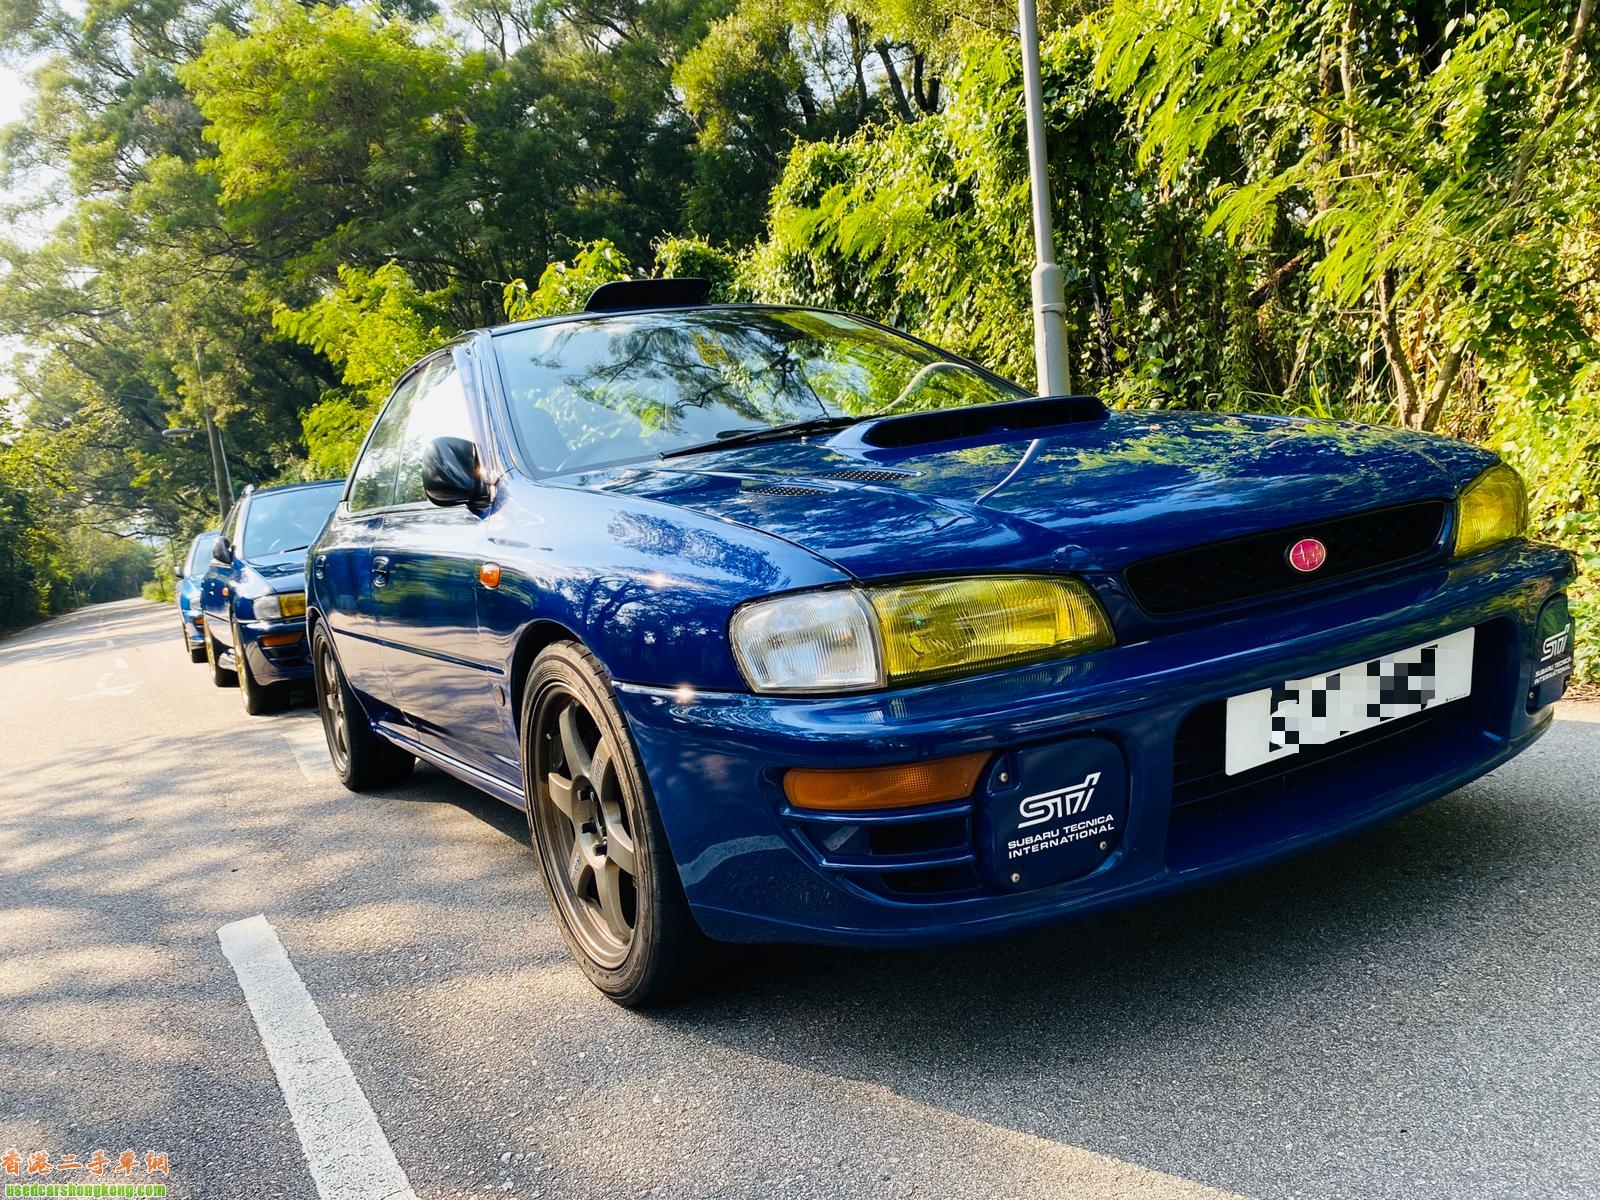 1997 Subaru Impreza Wrx Sti Gc8 555 V Limited Edition 二手車出售香港subaru Impreza Wrx Sti 二手車易手車 香港二手車網